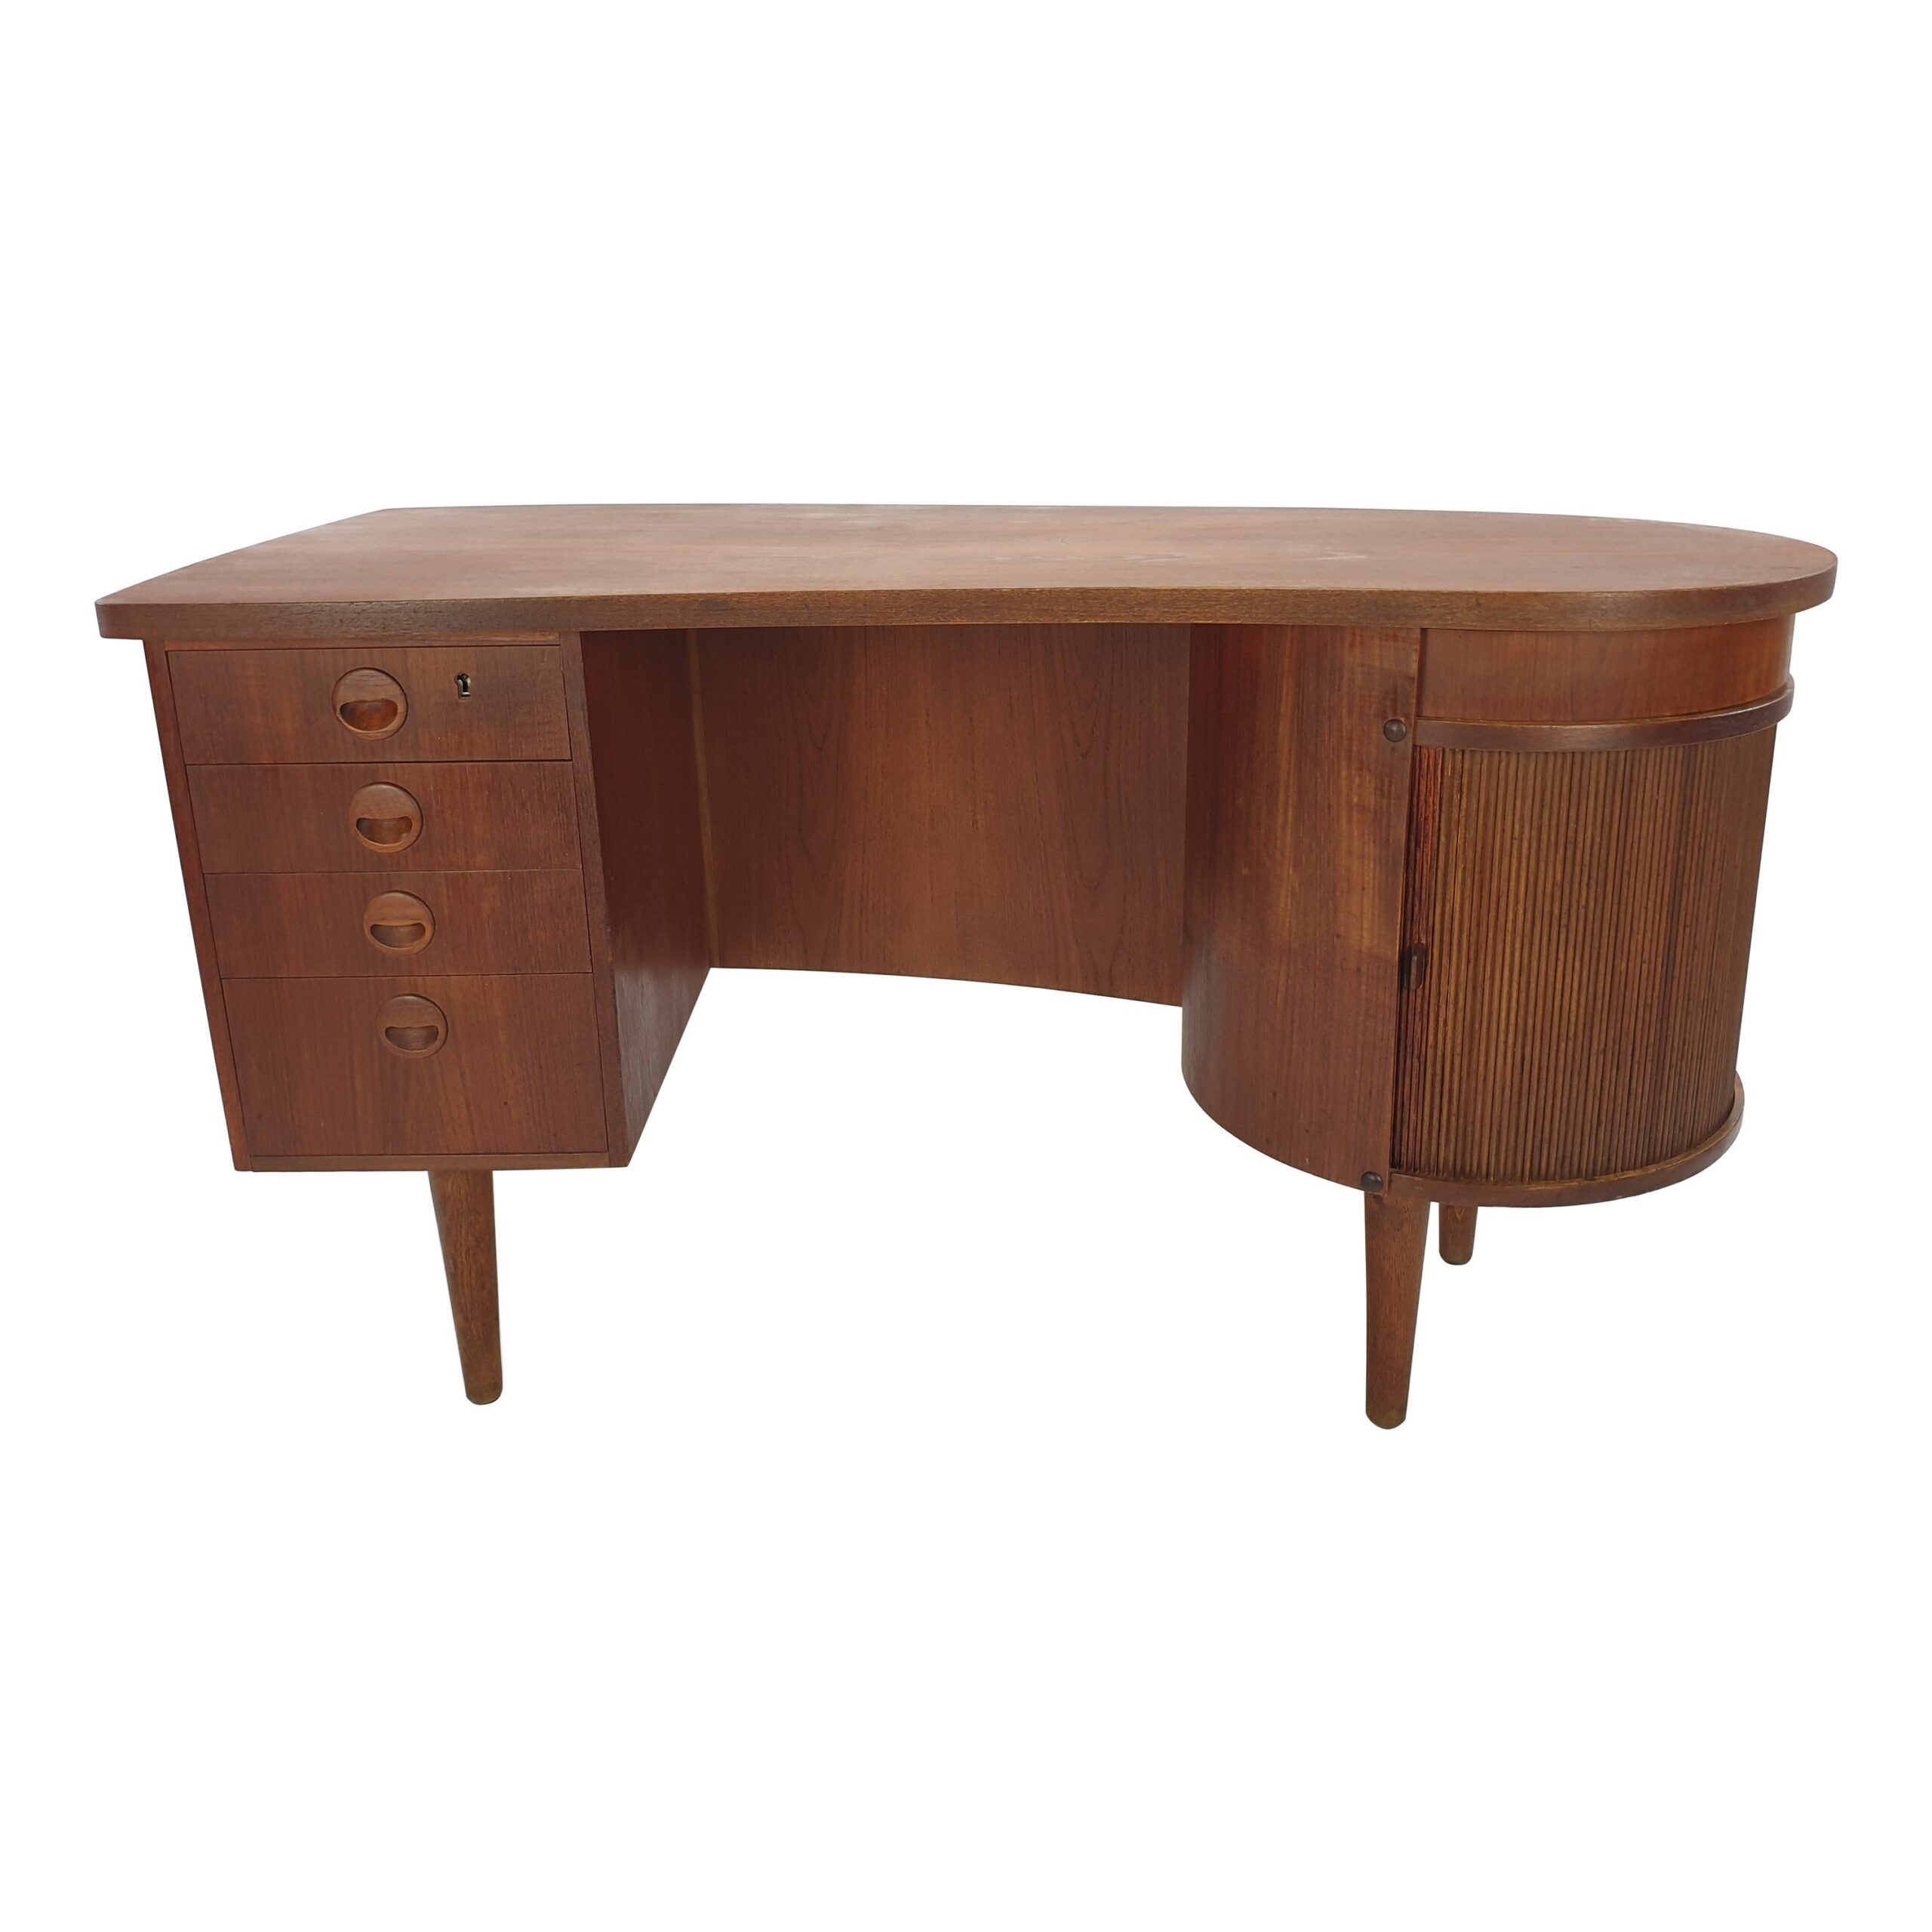 Elegant Mid Century Desks Stylish Desk Options inspired by Mid Century Design